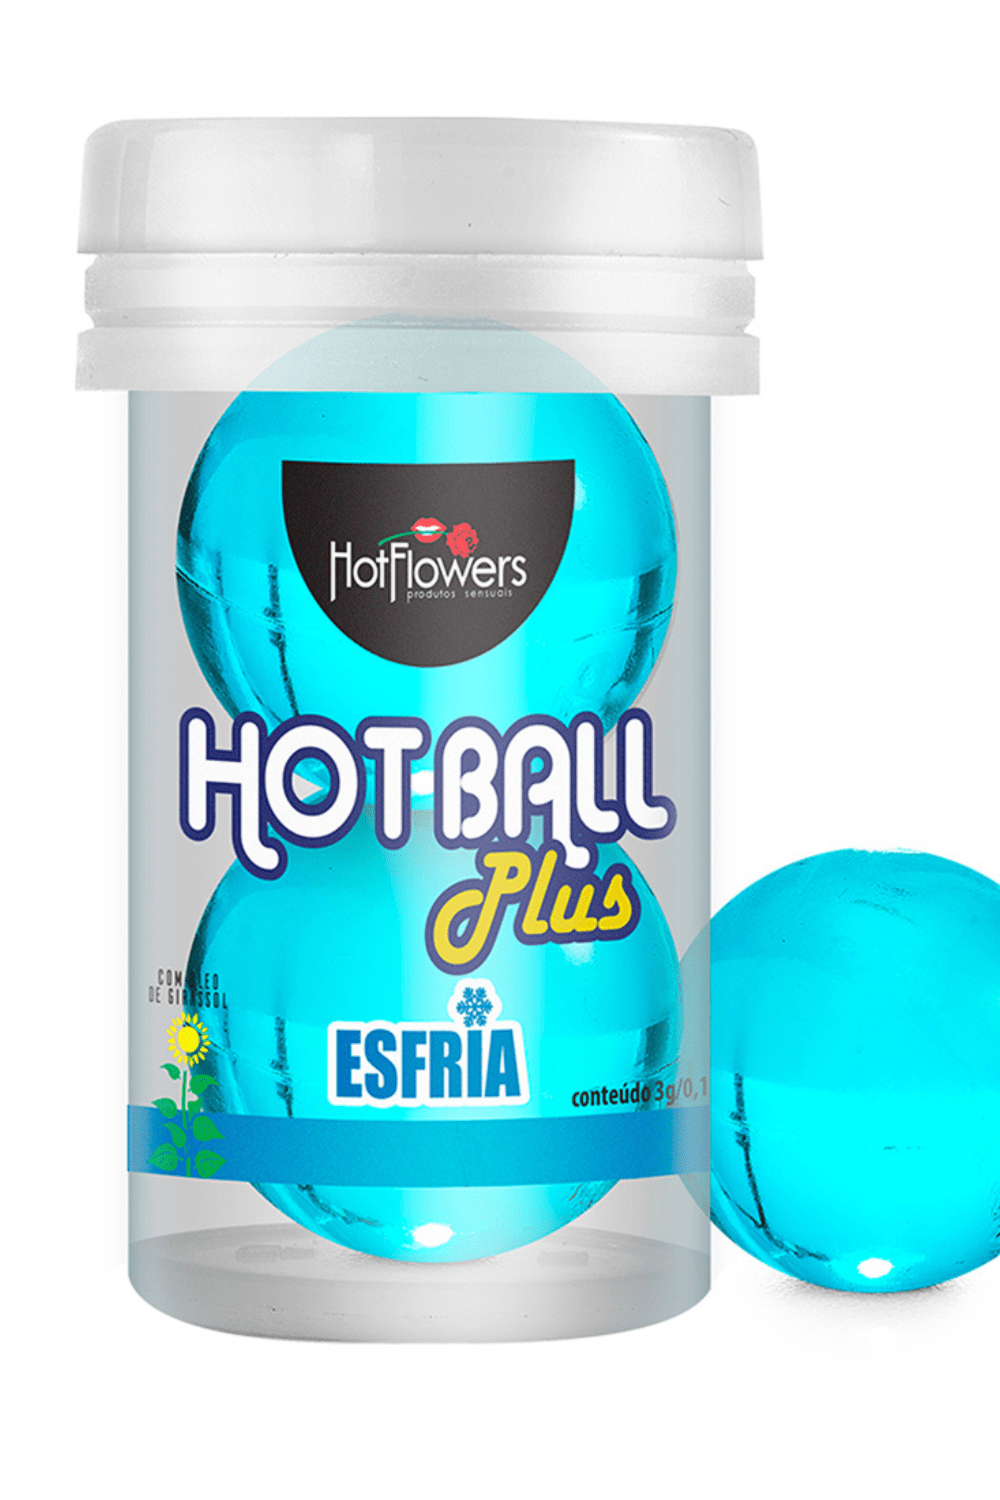 Hot Ball Plus Funcional Esfria - c/ 2 Unidades